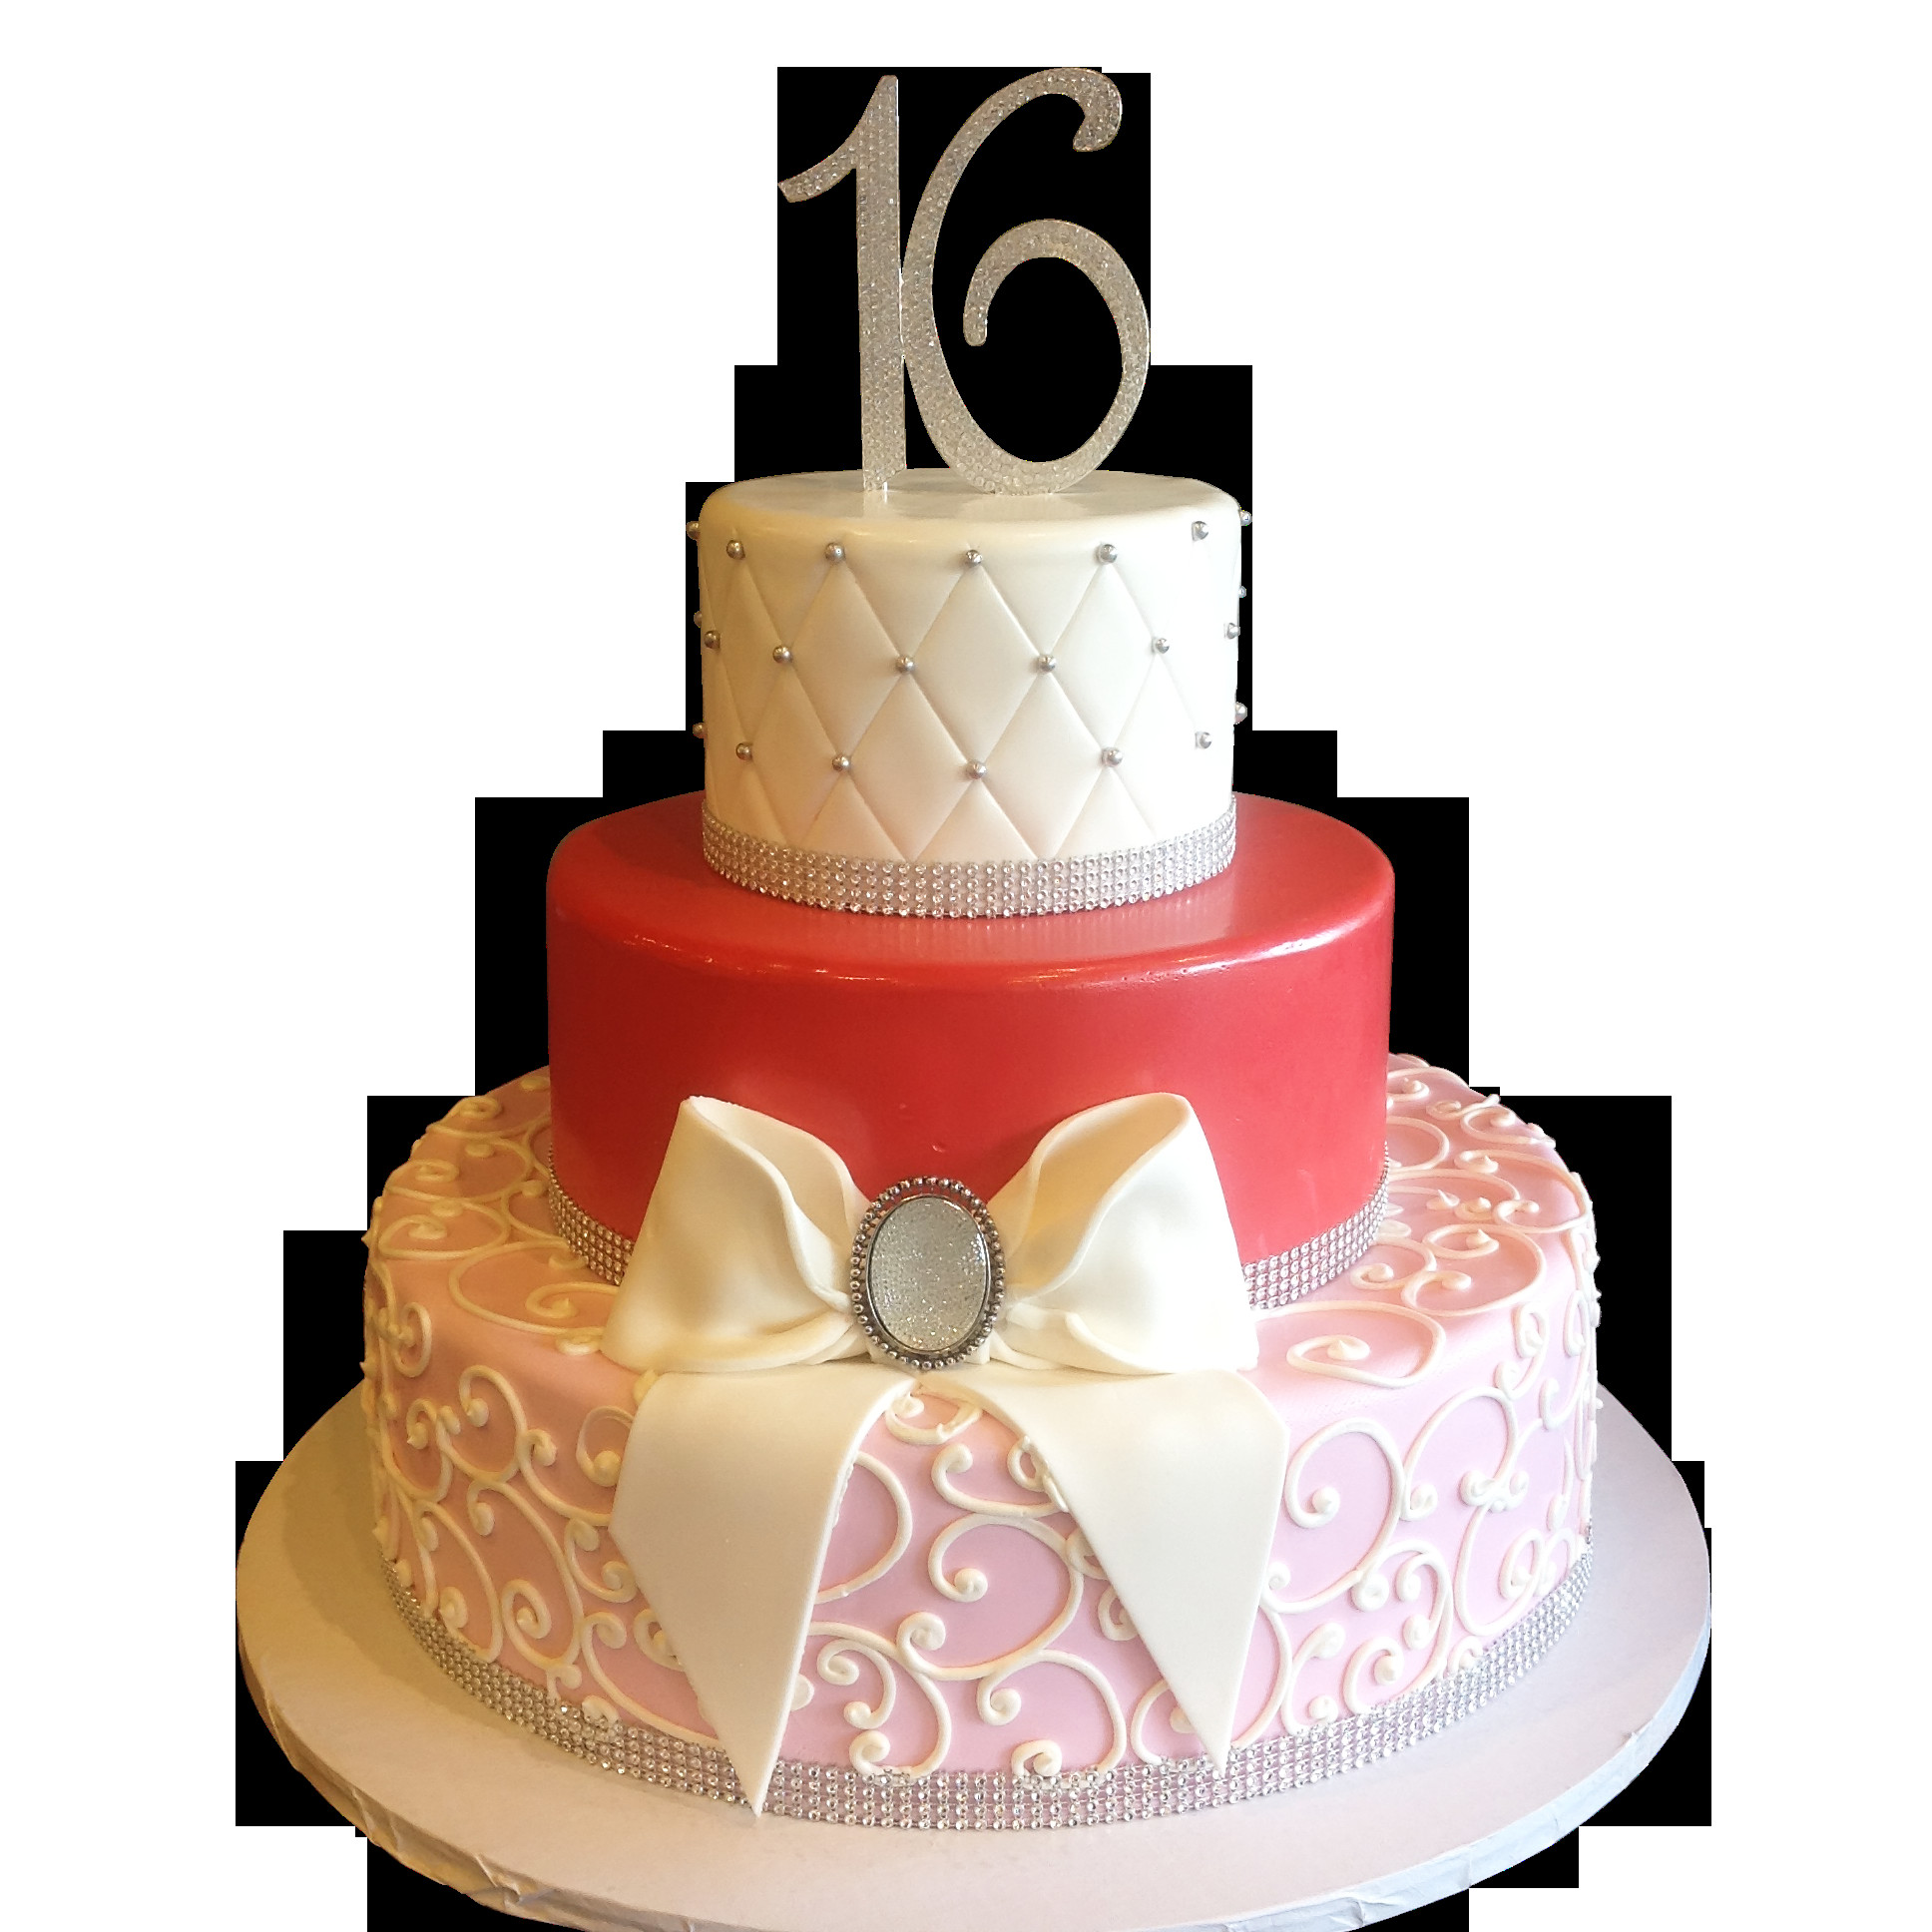 Sweet Sixteen Birthday Cakes
 Elegant Sweet 16 Birthday Cakes in NYC